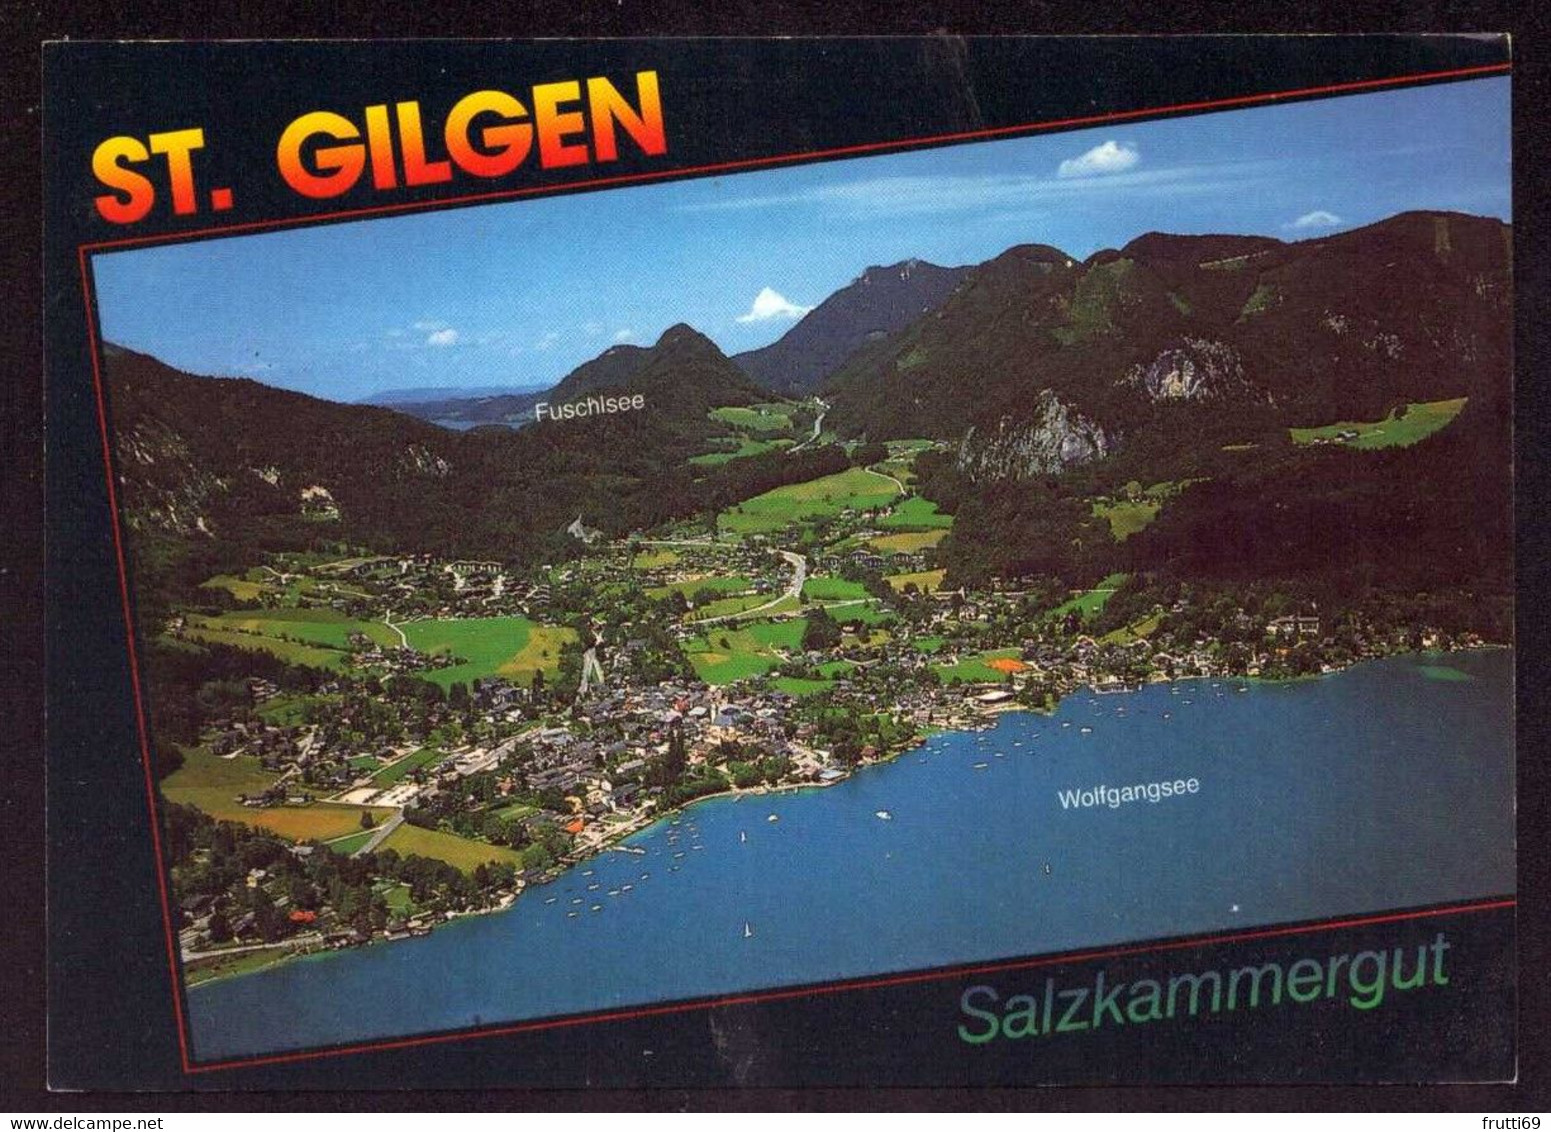 AK 078247 AUSTRIA - St. Gilgen - St. Gilgen